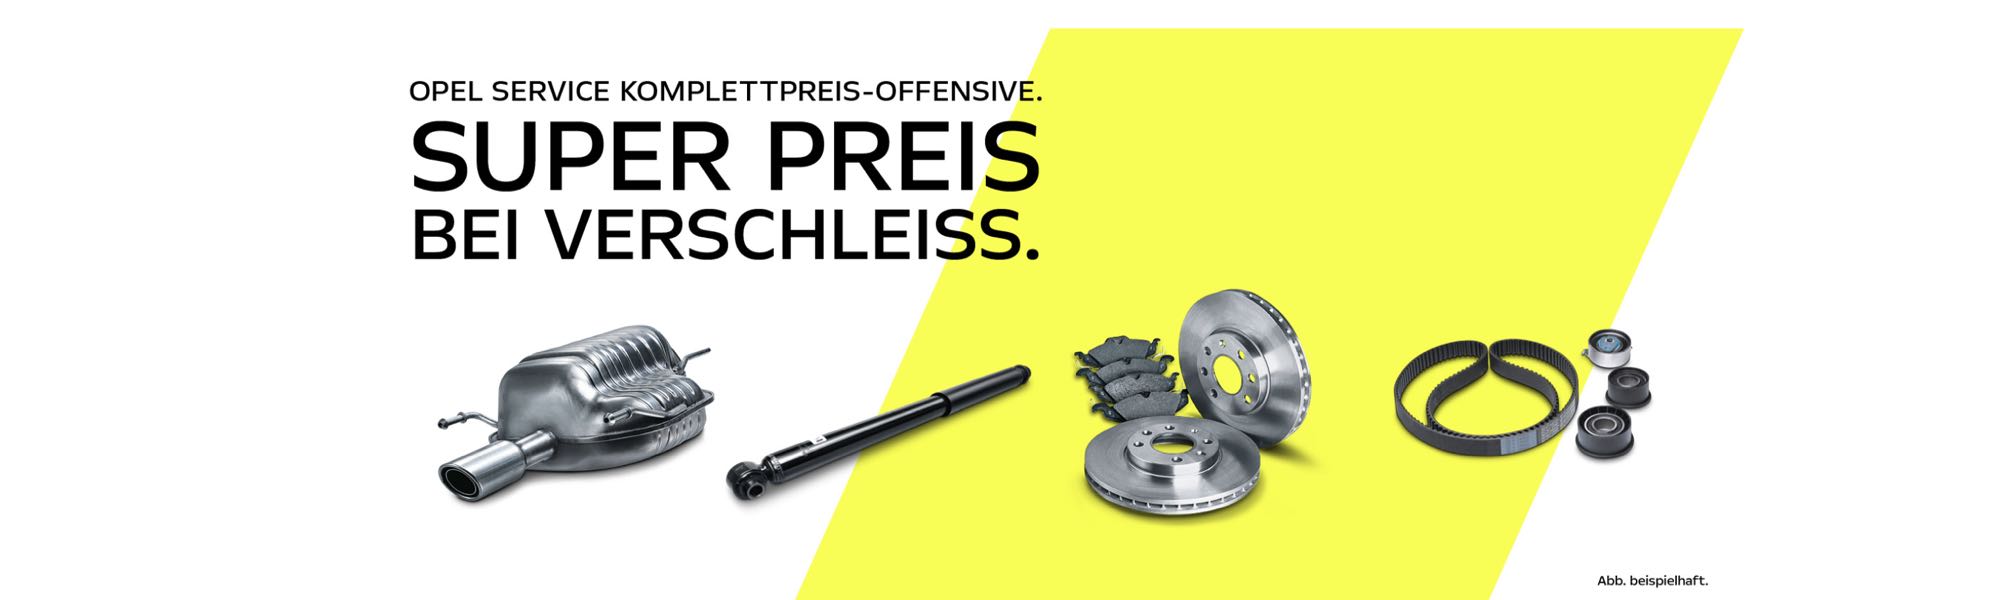 Opel Komplettpreis-Offensive